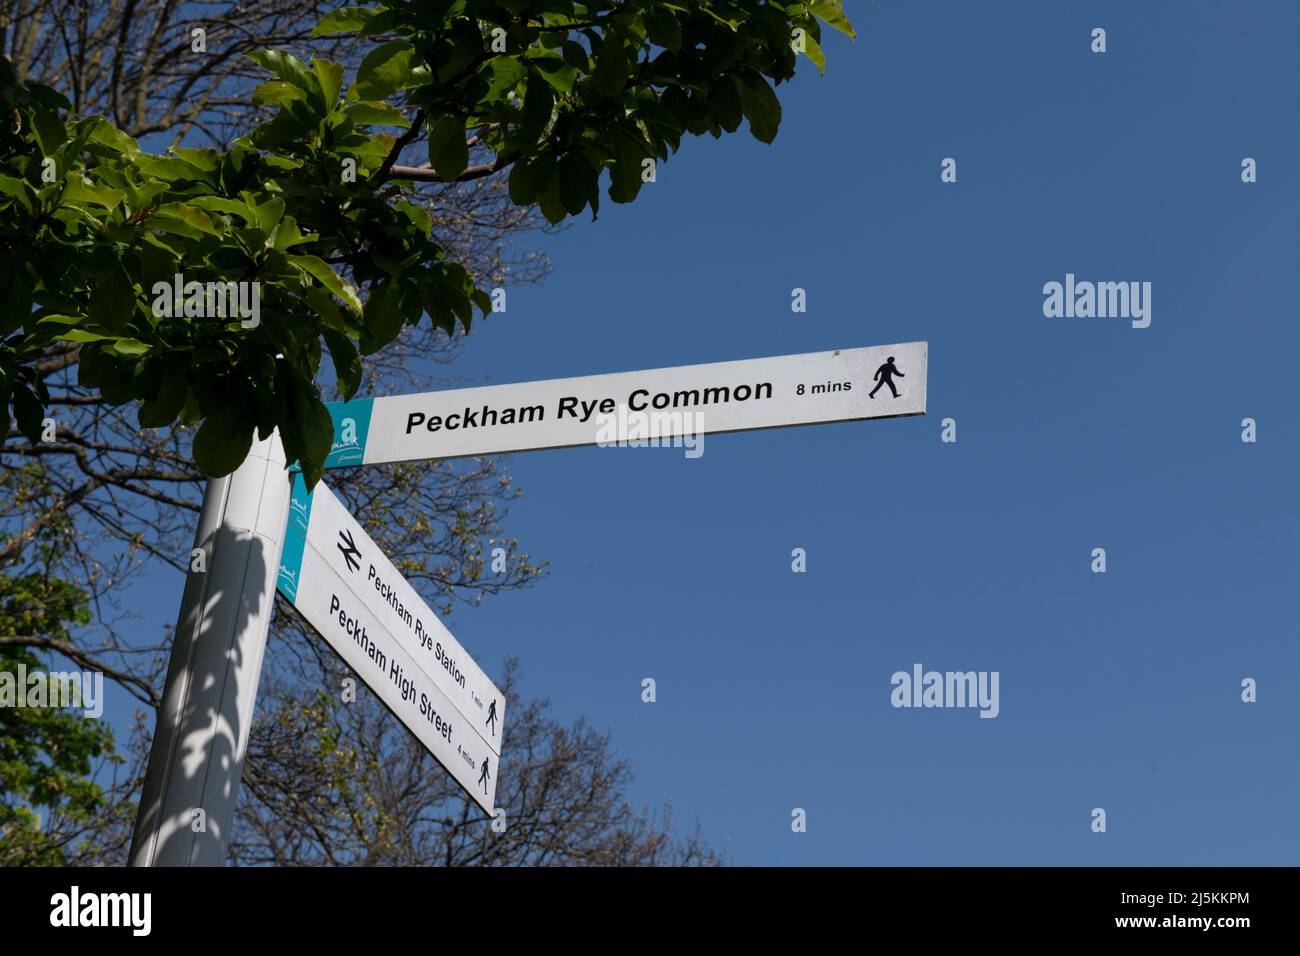 Street signs indicating Peckham Rye Common Stock Photo